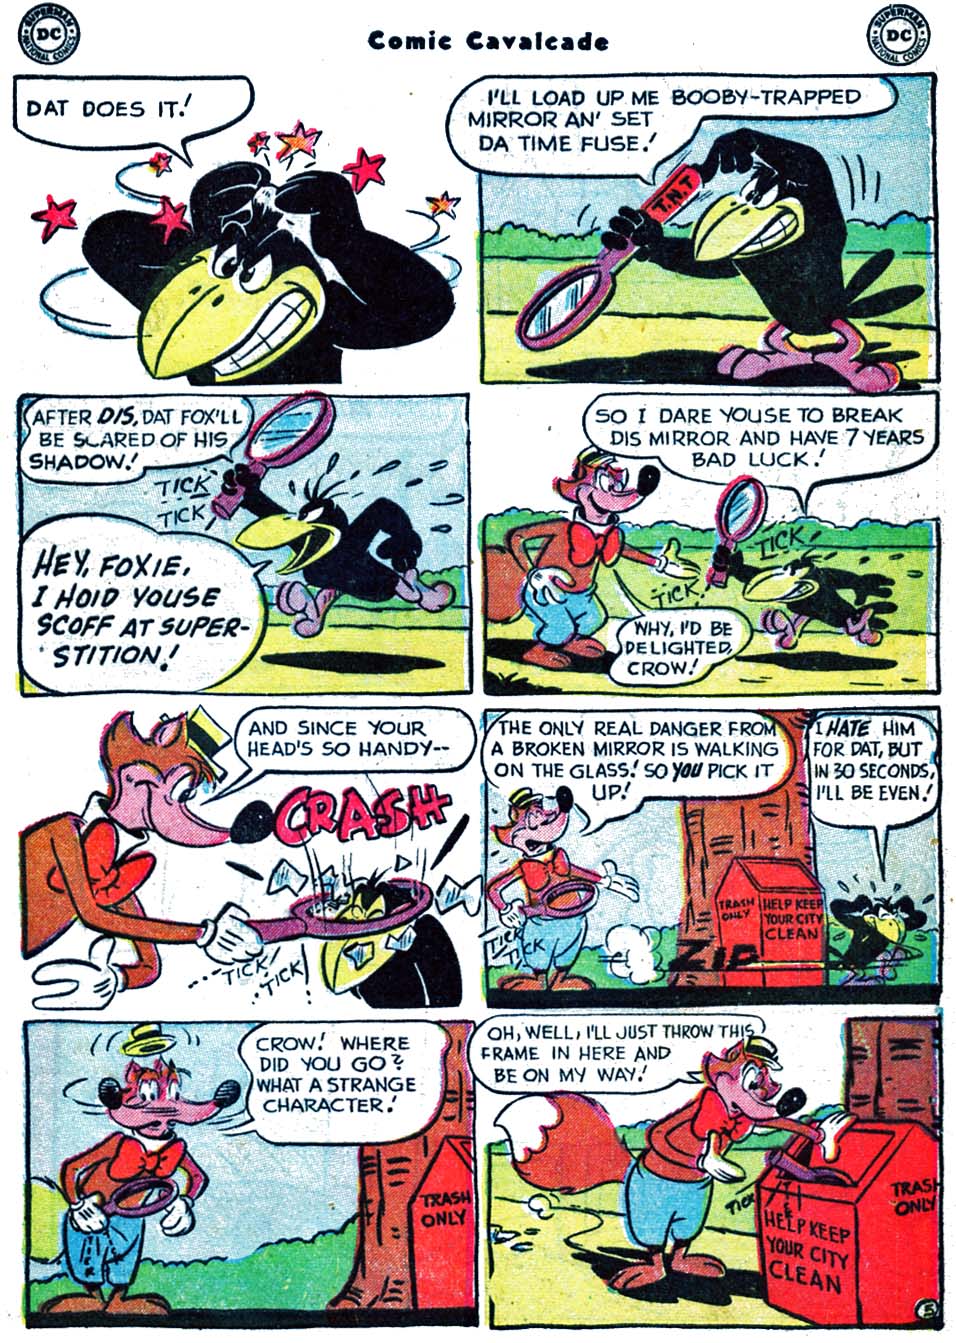 Comic Cavalcade issue 62 - Page 7